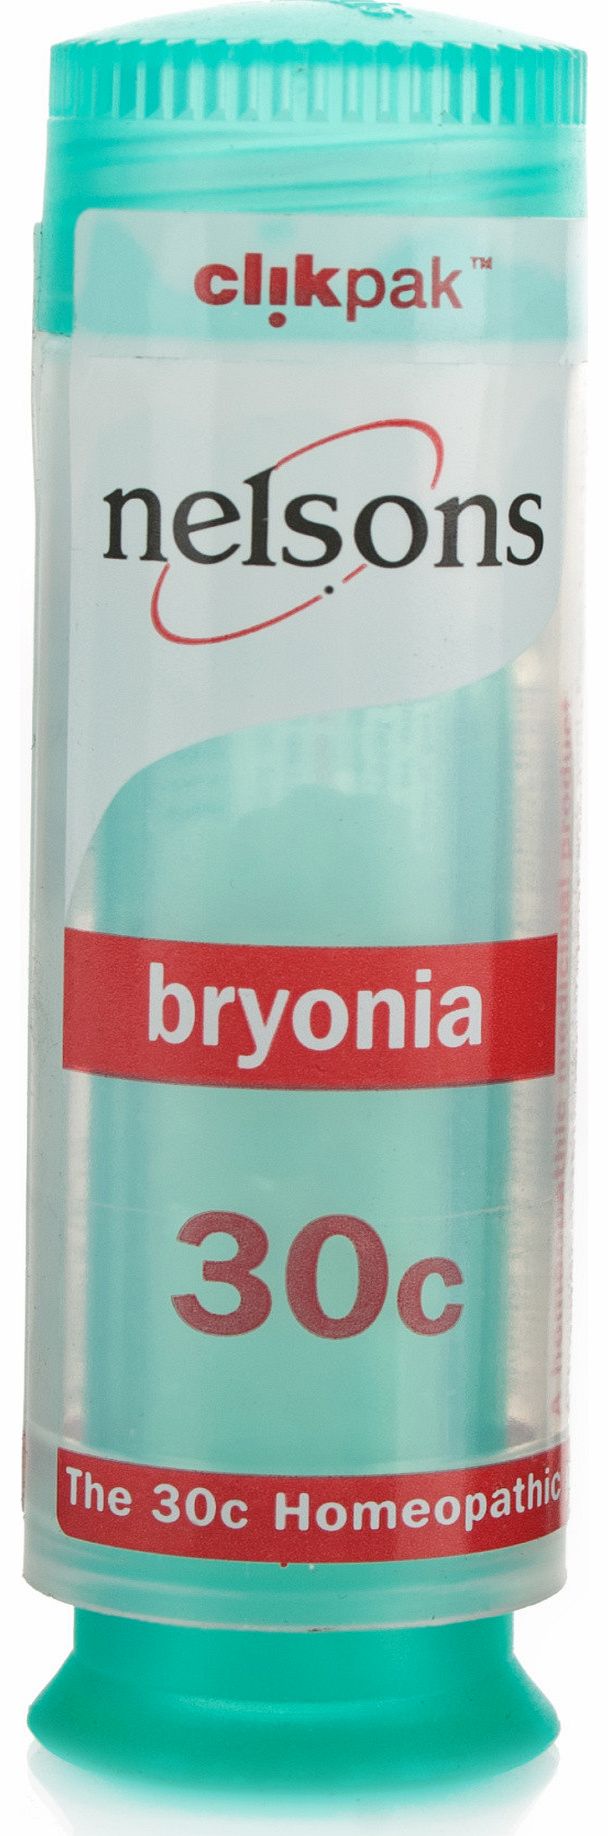 Bryonia 30c